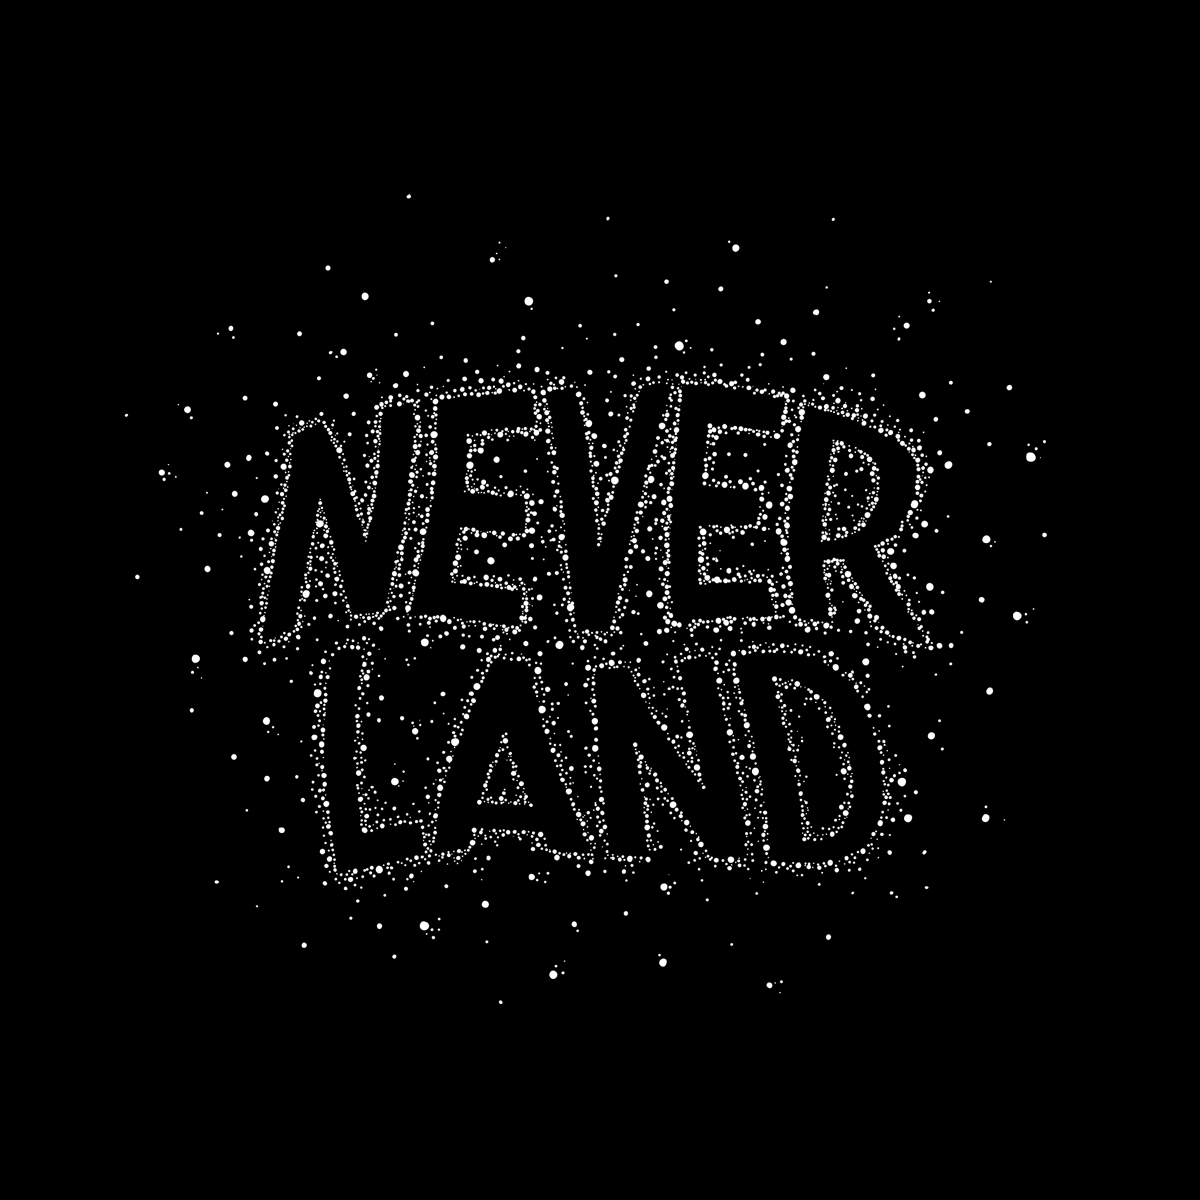 Neverland | Pixie Dust Experimental Lettering